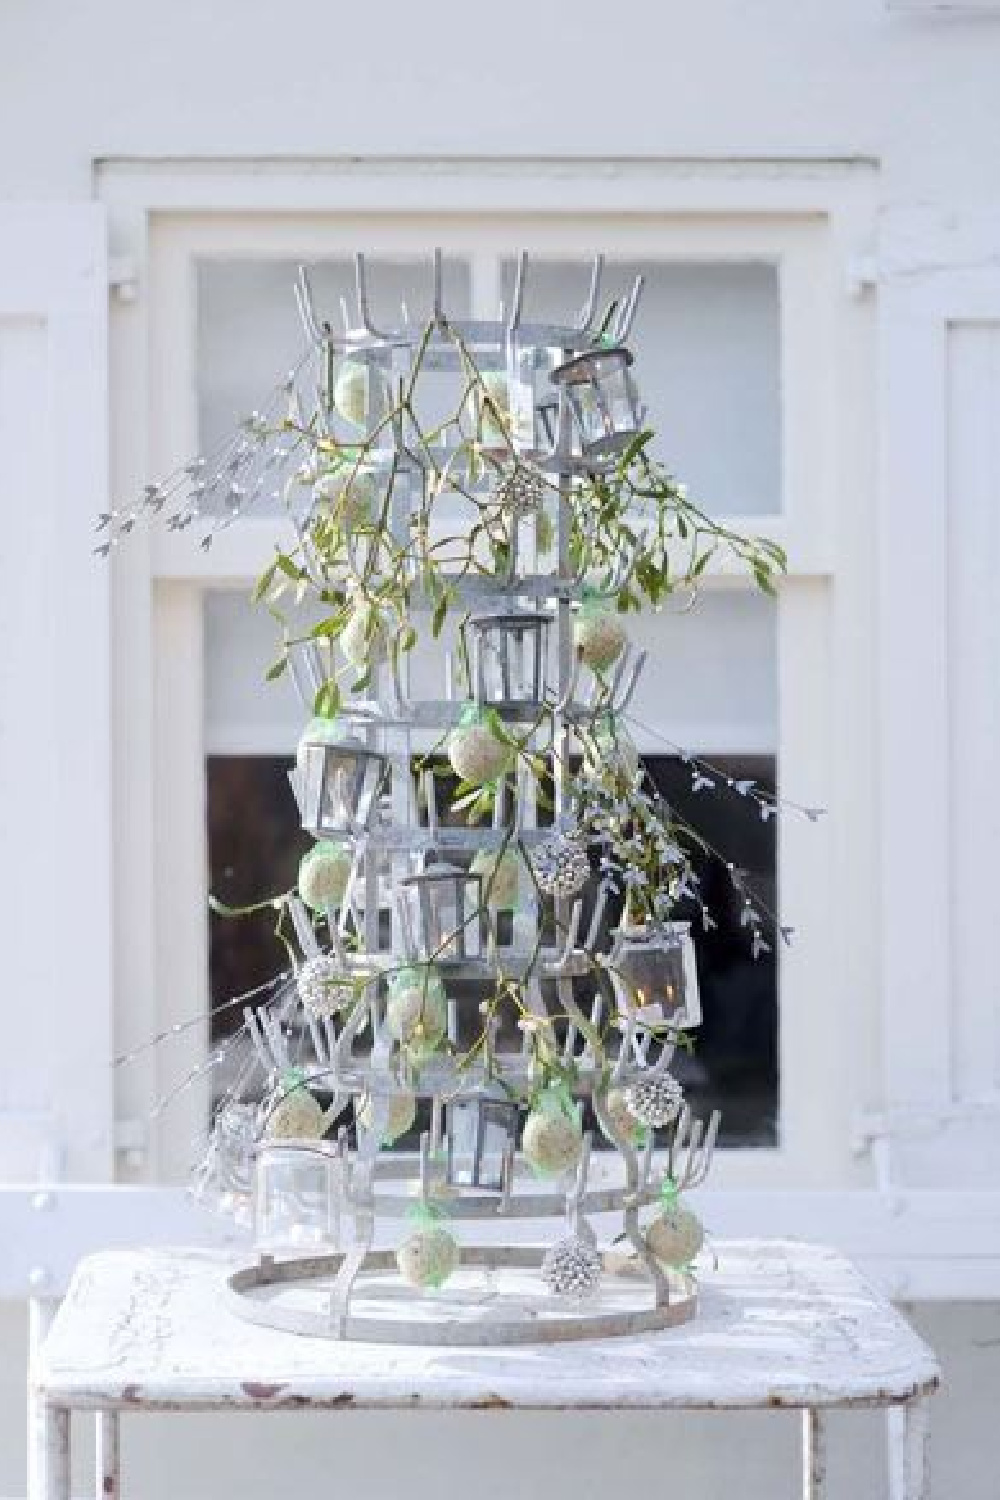 Beautiful serene bottle rack decorated as a design element - Libelle. #bottlerack #vintagedecor #scandinavianstyle